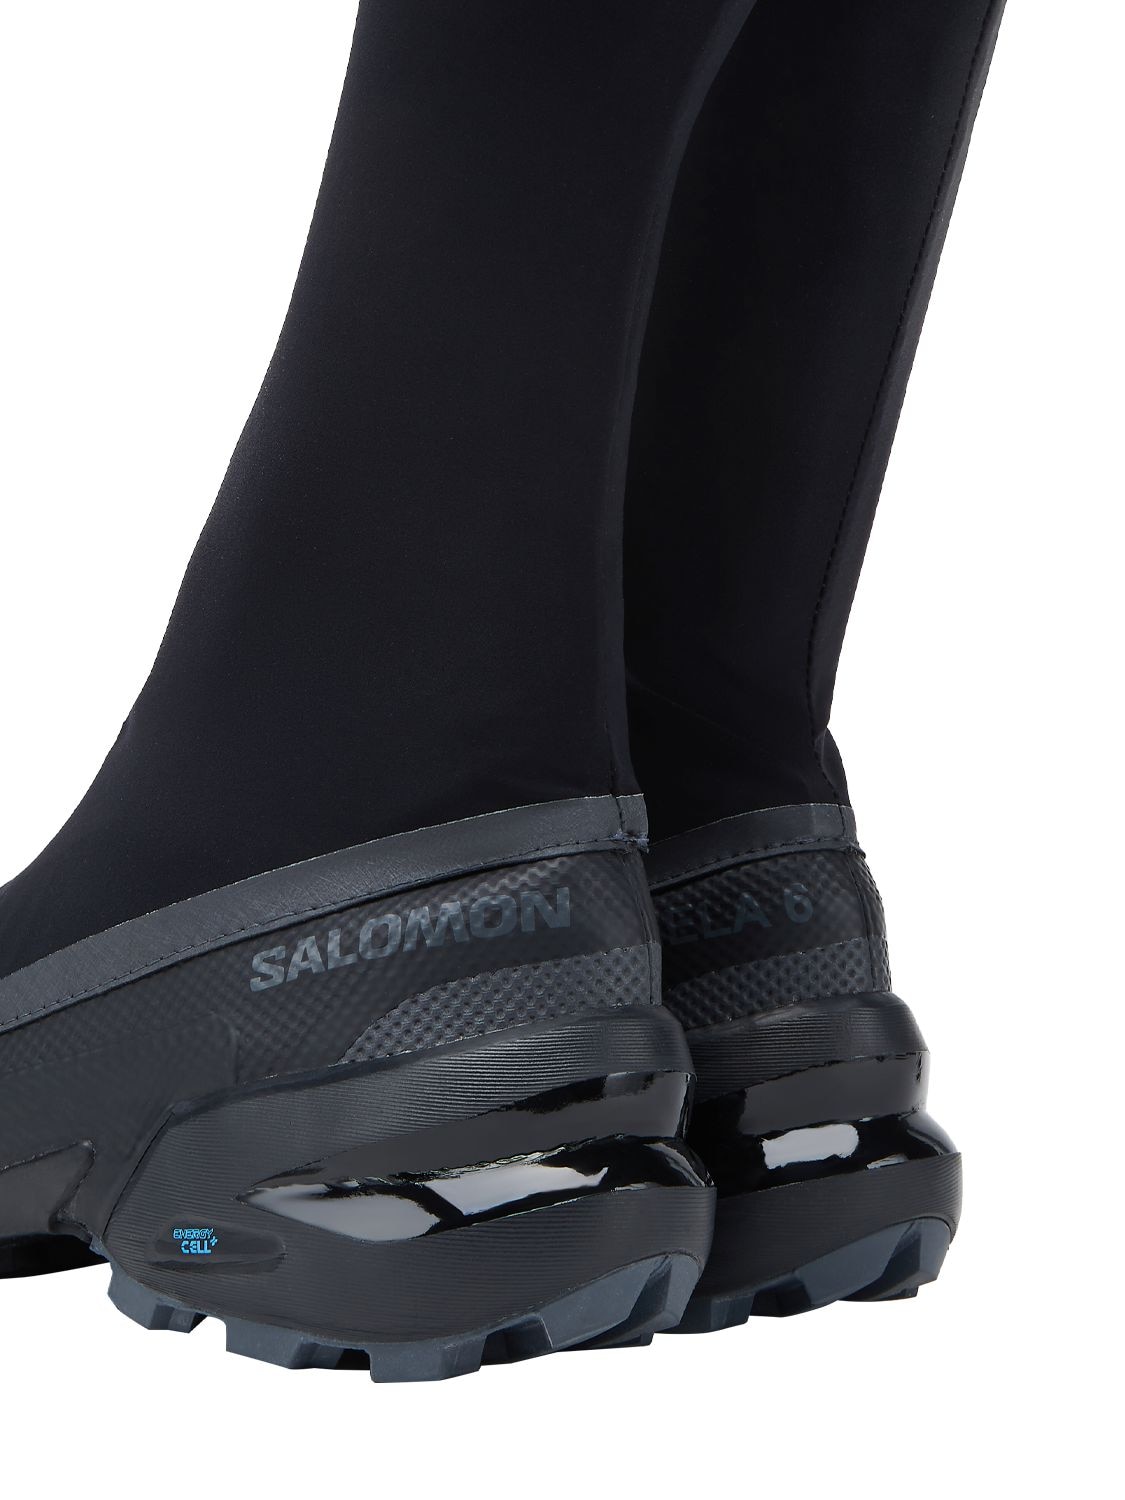 MM6 X SALOMON CROSSWADER靴子